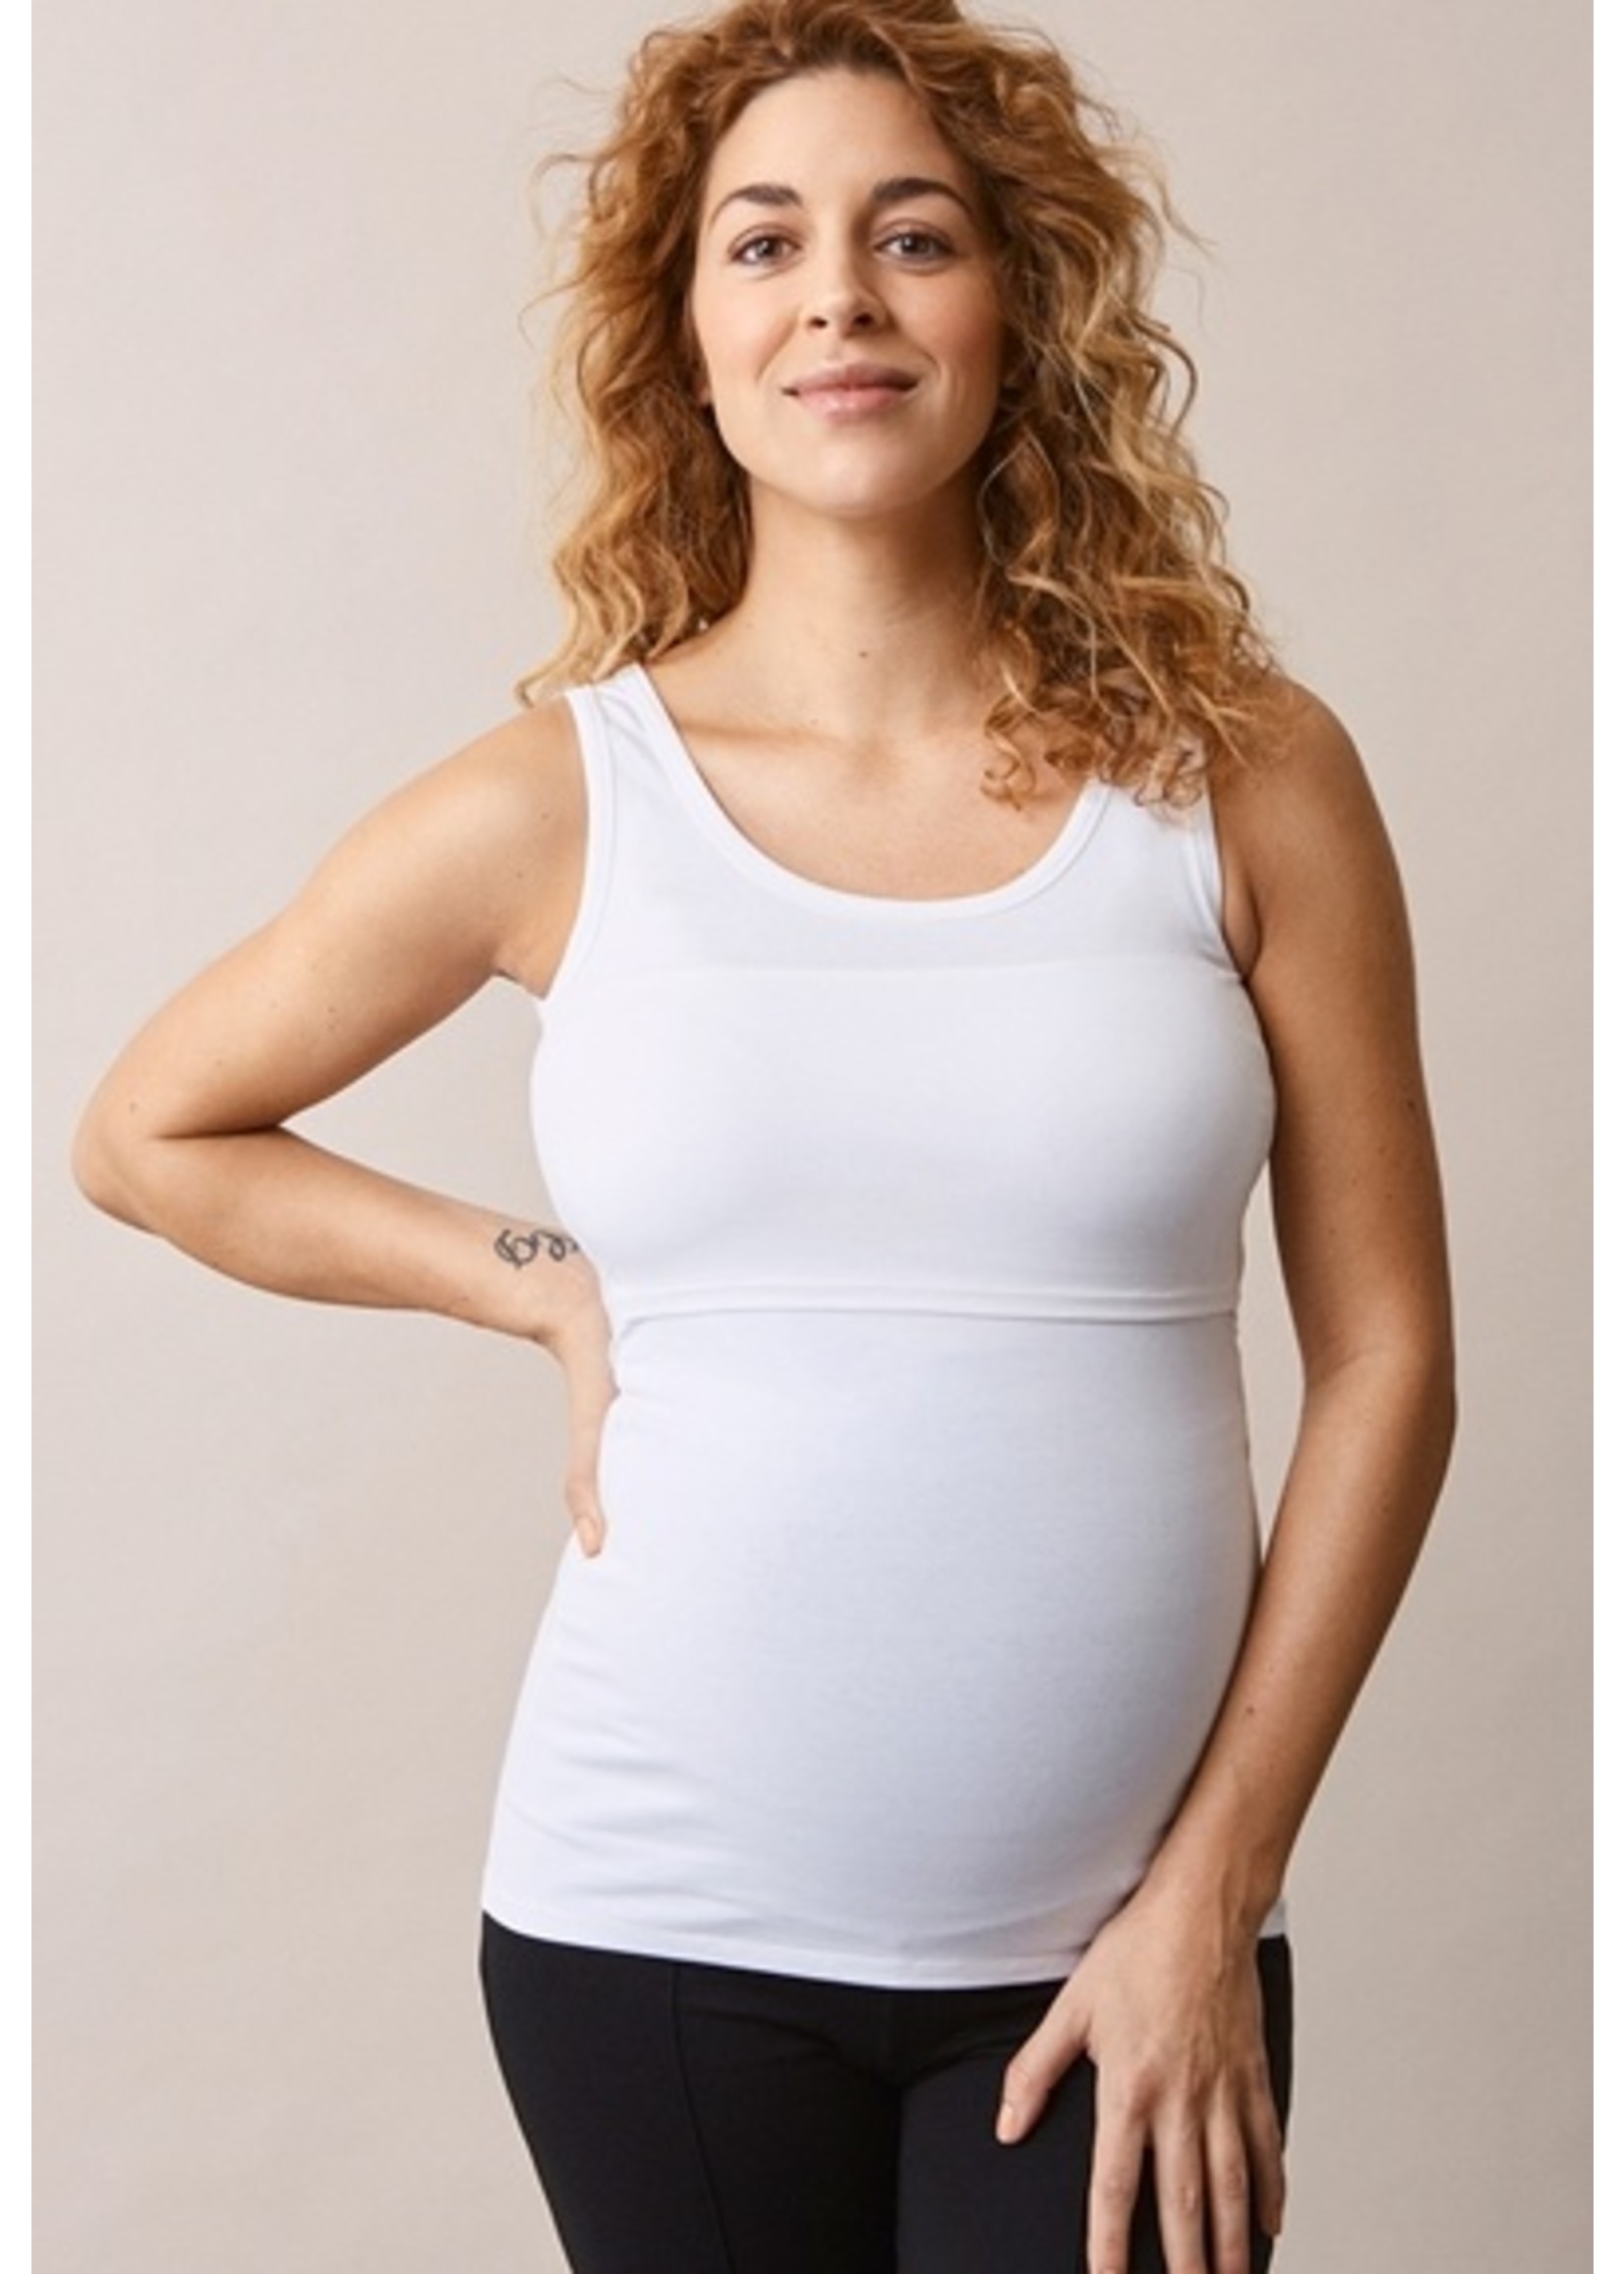 MRAFDGFB Women's Maternity Nursing Tops Womens Nursed Tank Tops Built in  Bra Top for Sleeveless Comfy Breastfeeding (Pink, XL)